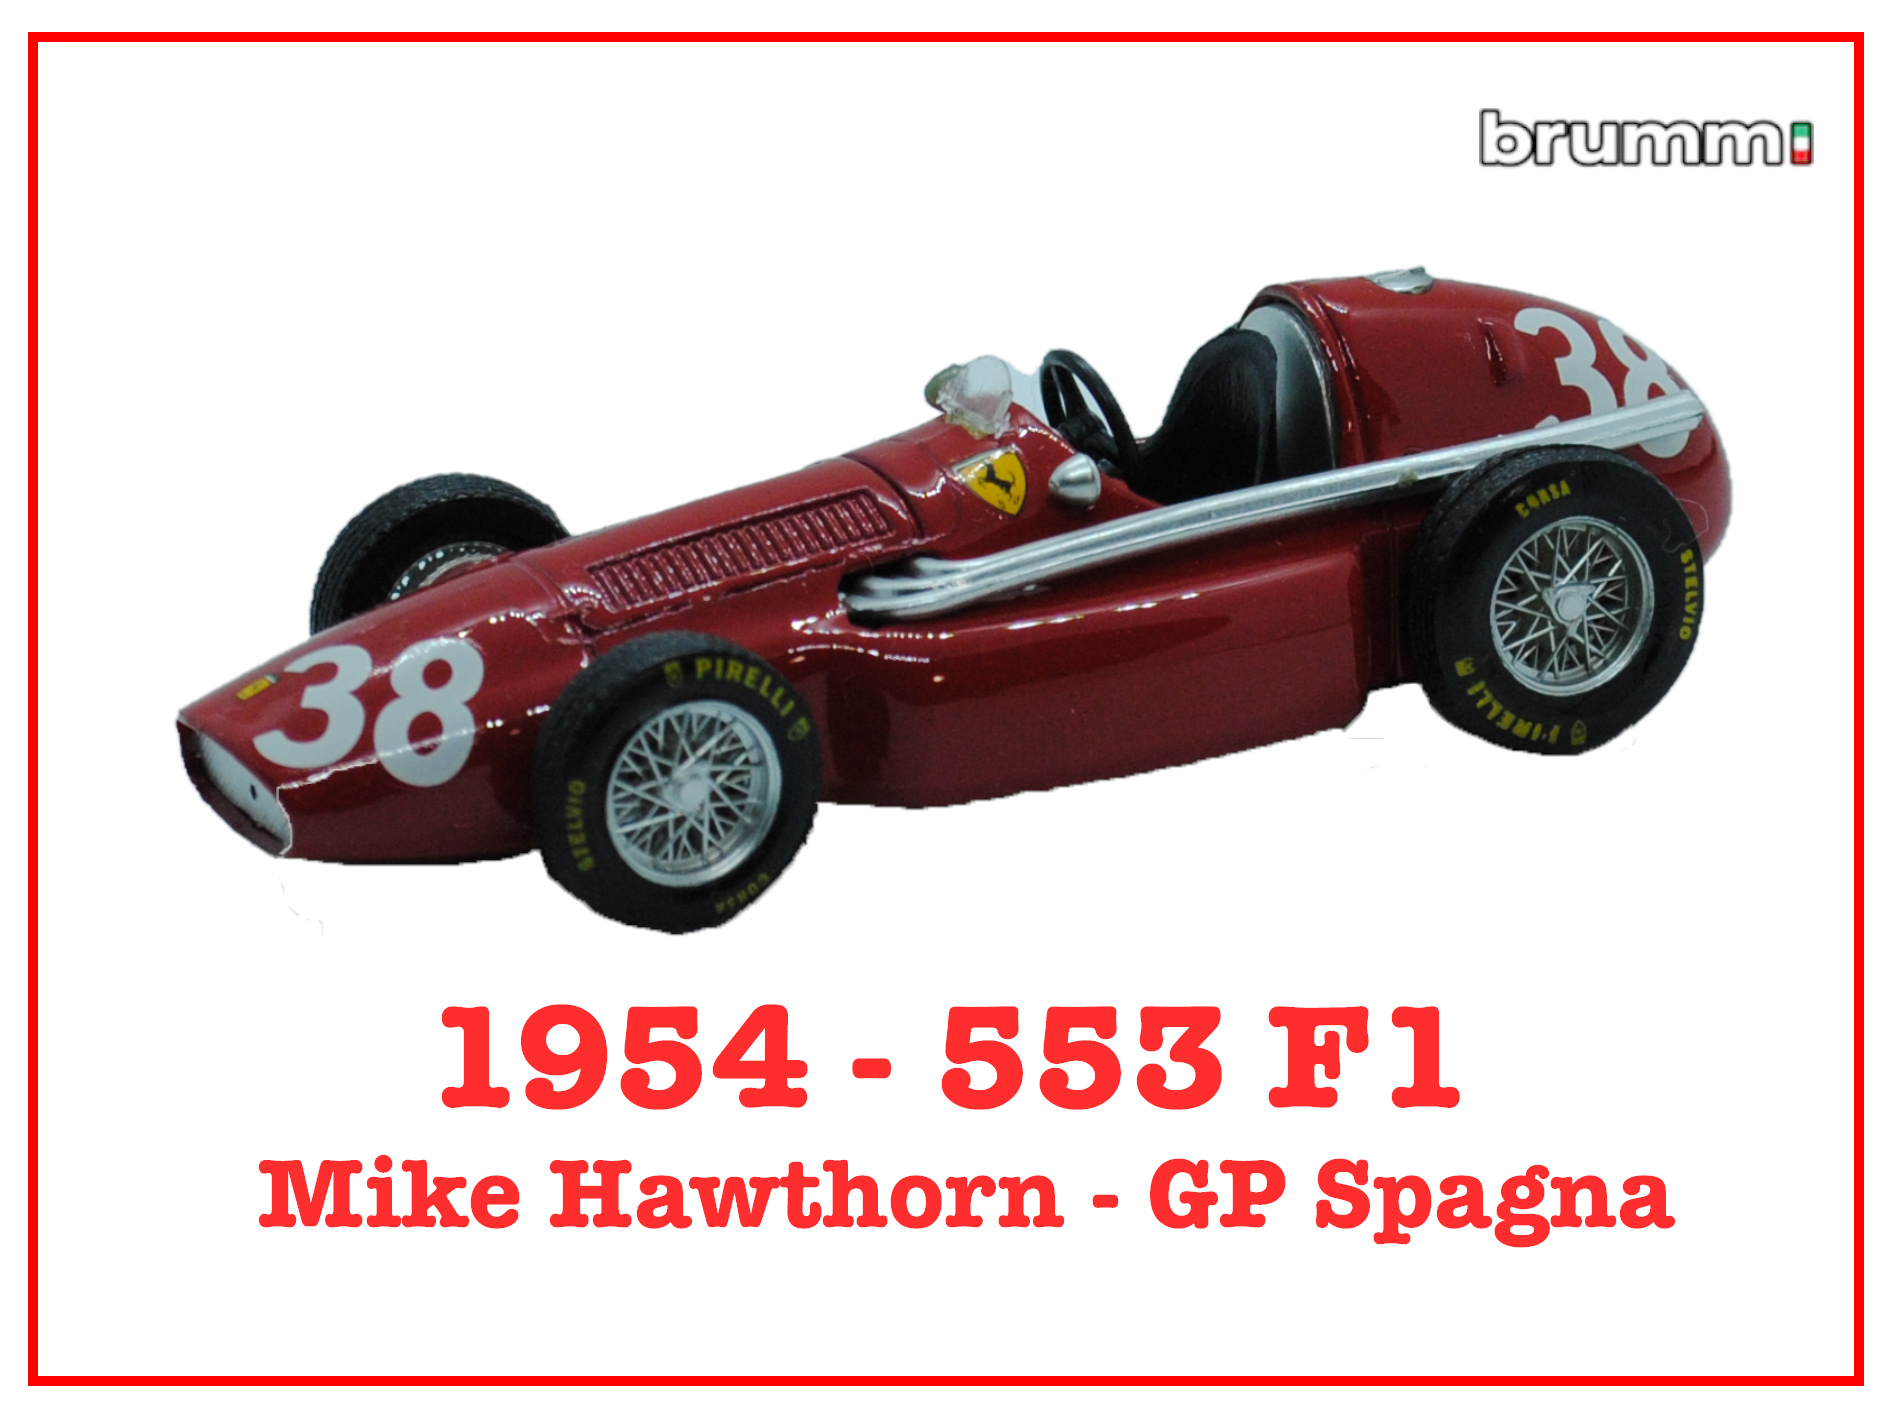 Immagine 553 F1 - Mike Hawthorn GP Spagna